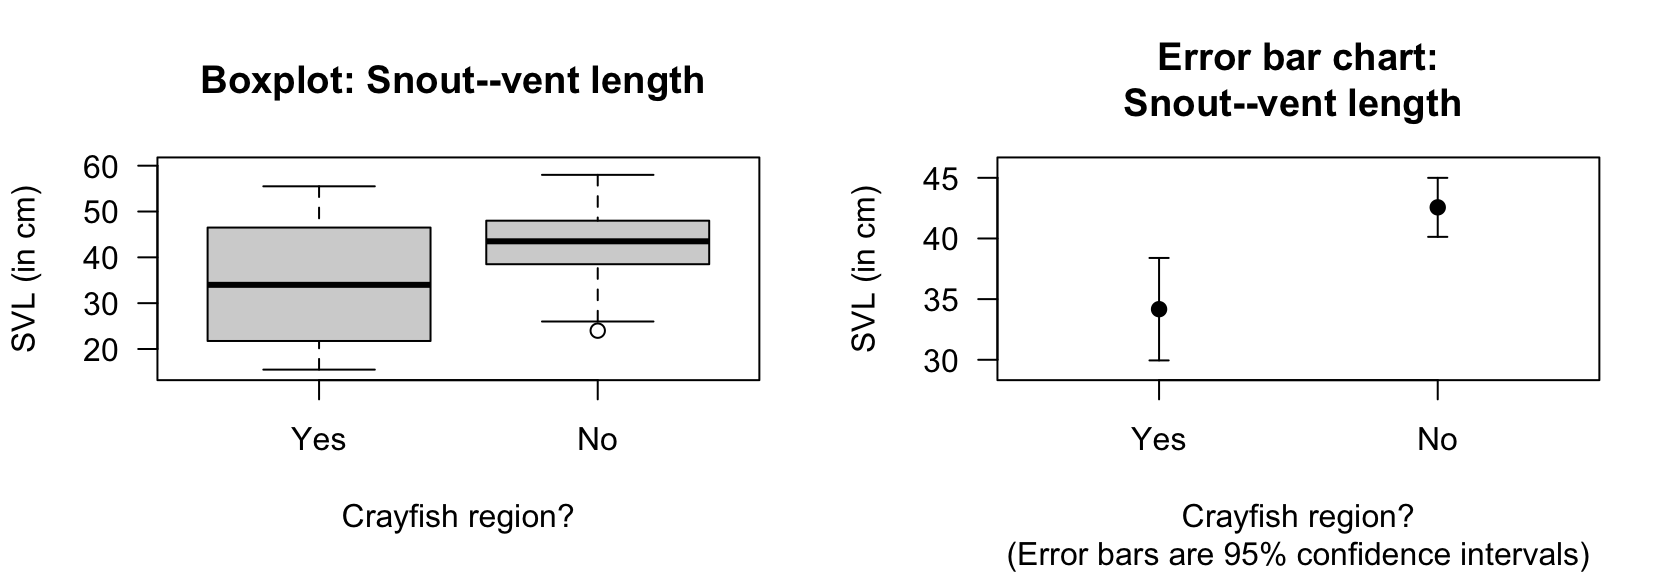 Boxplot (left) and error bar chart (right) of SVL for female snakes in two regions